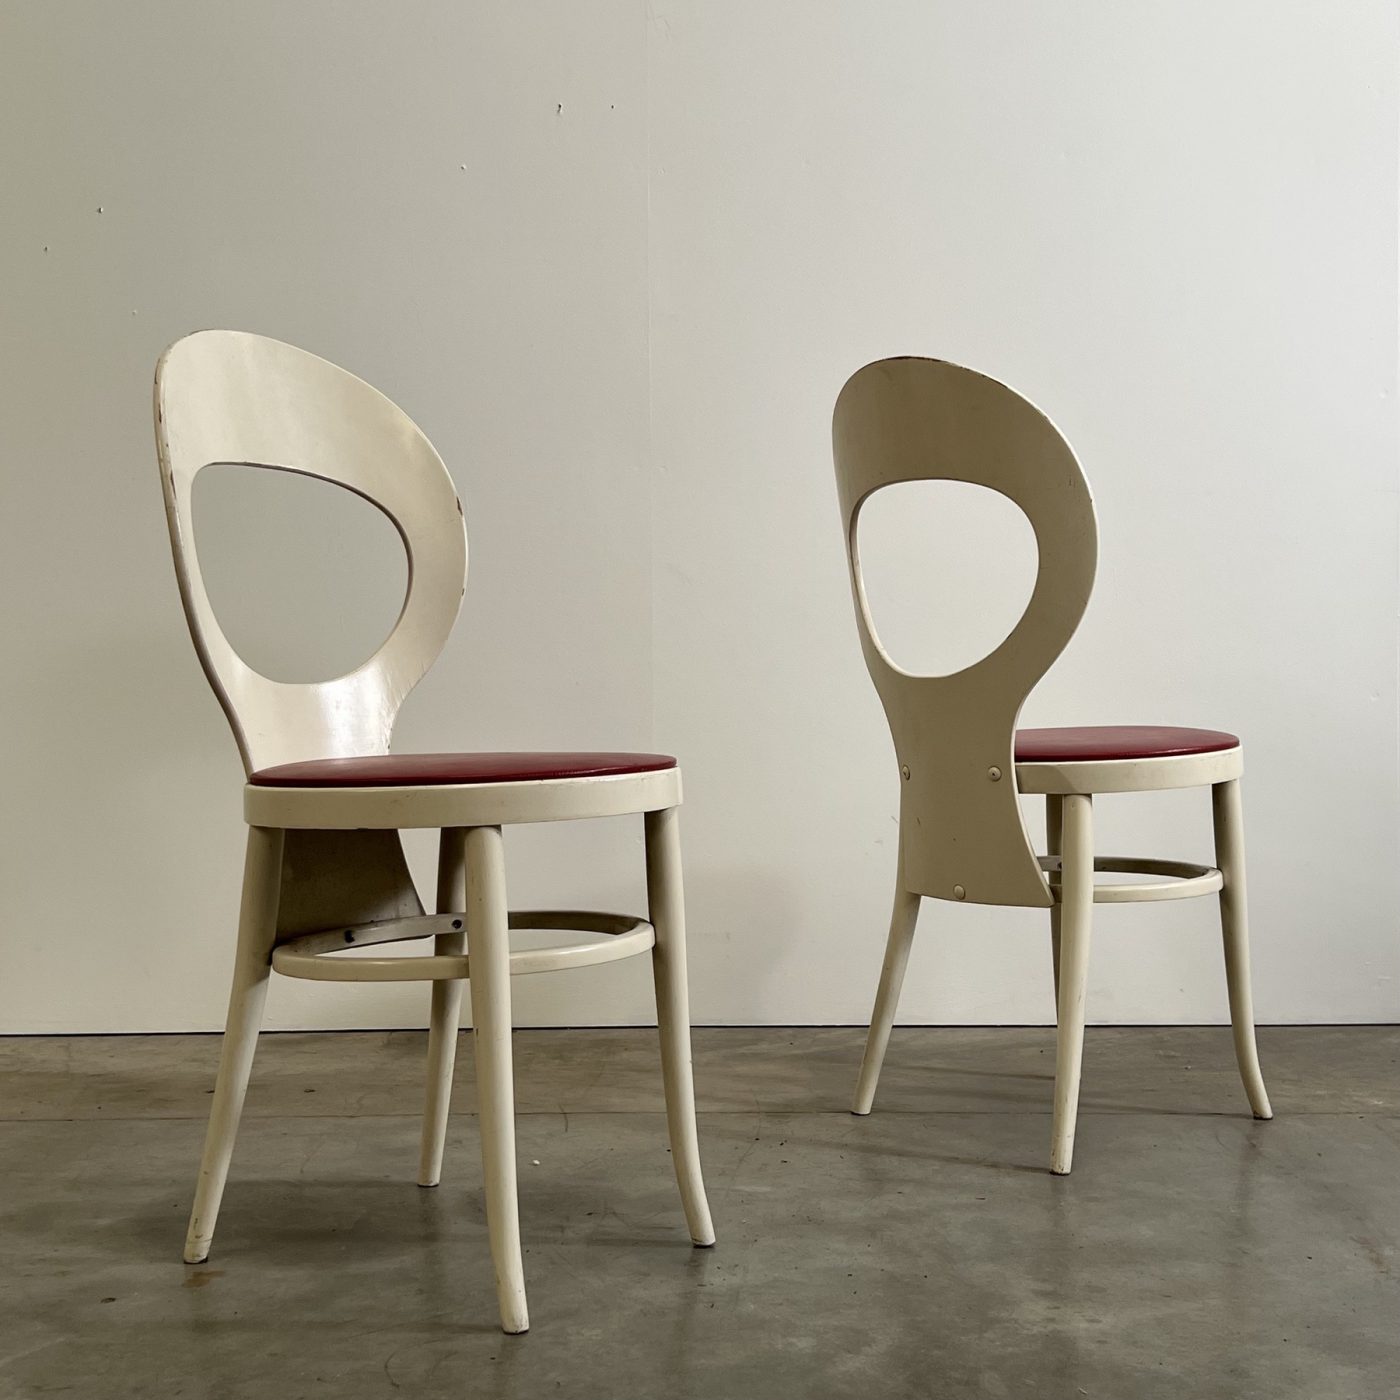 objet-vagabond-baumann-chairs0003